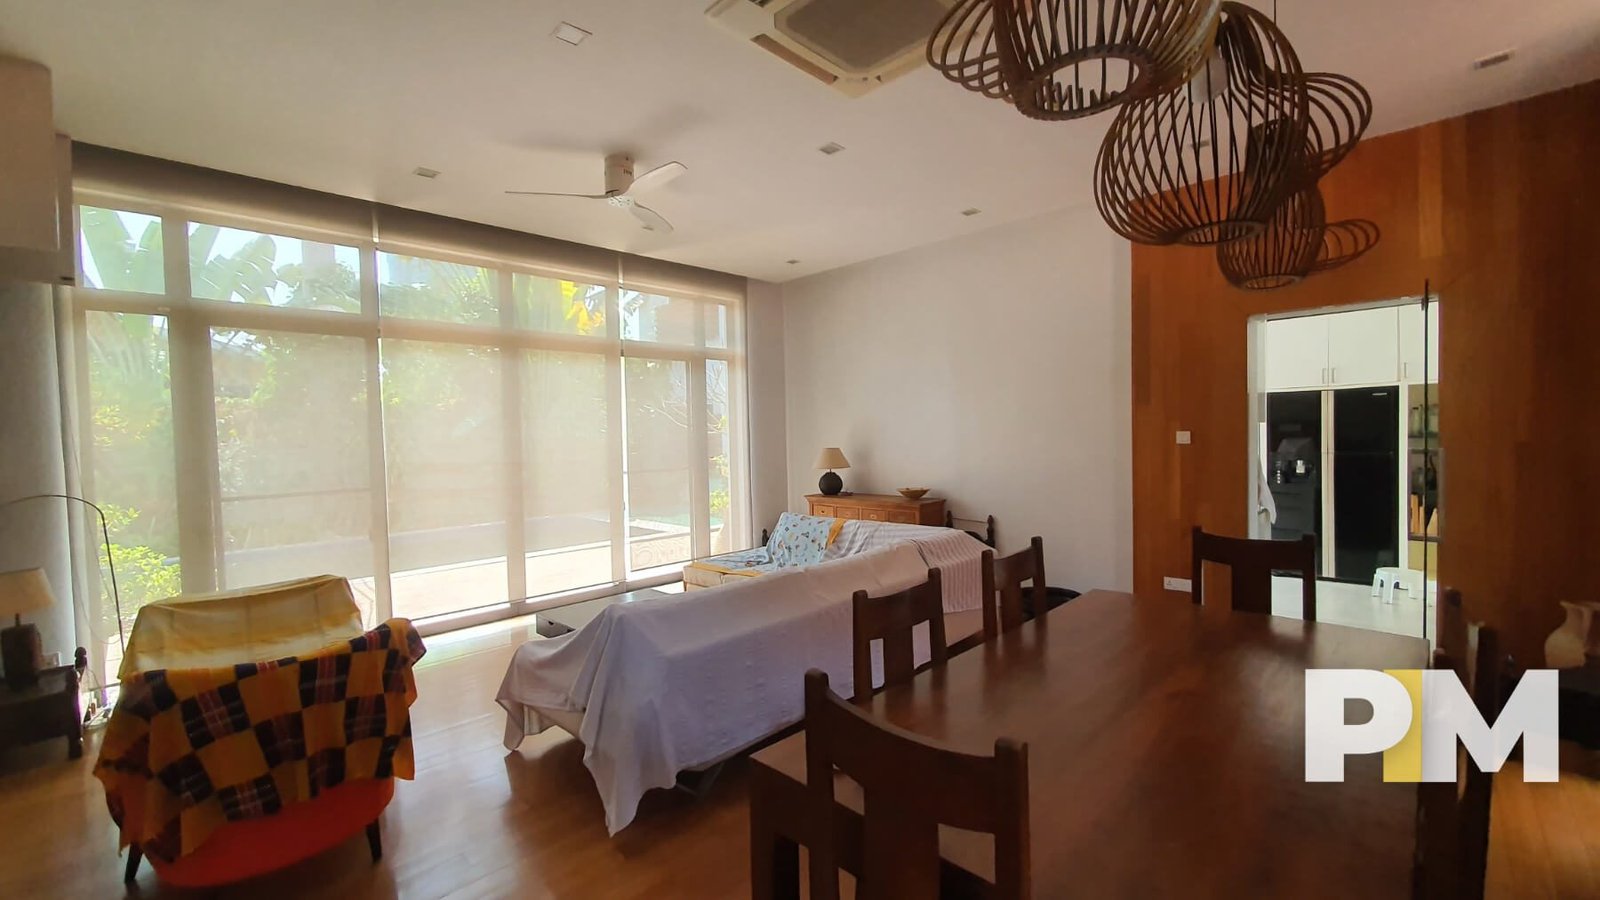 Living room area - Myanmar Real Estate (2)